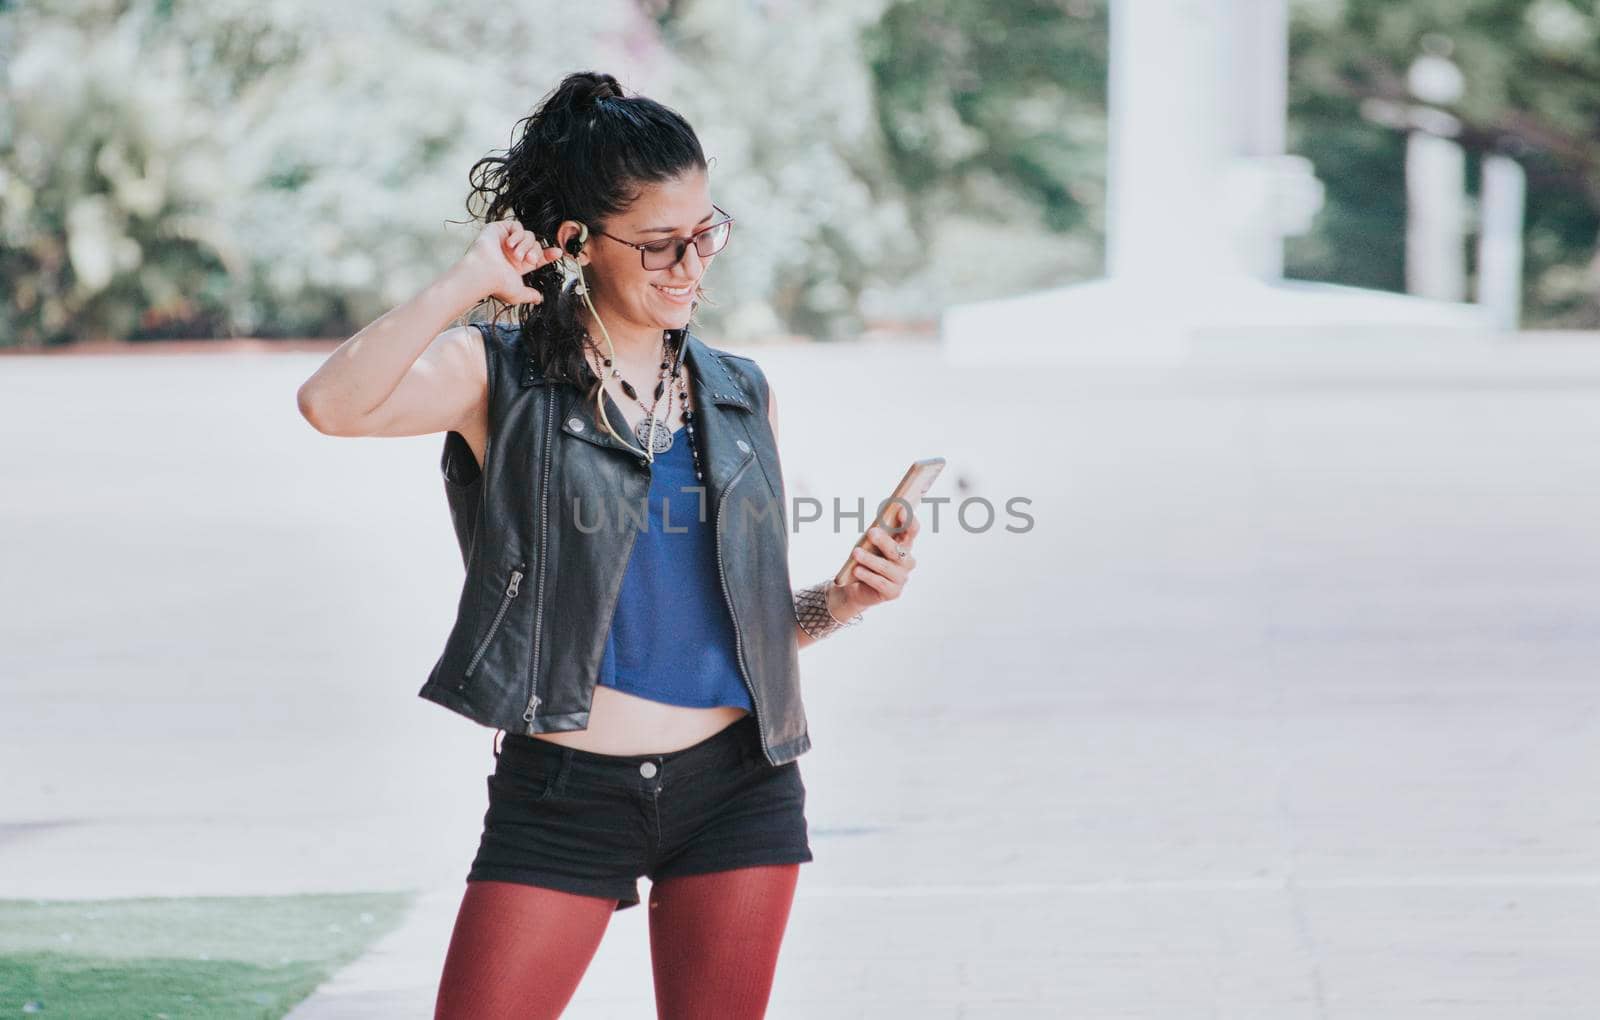 Latin girl listening to music outdoors, Urban girl listening to music with headphones outdoors, Happy woman listening to music outdoors